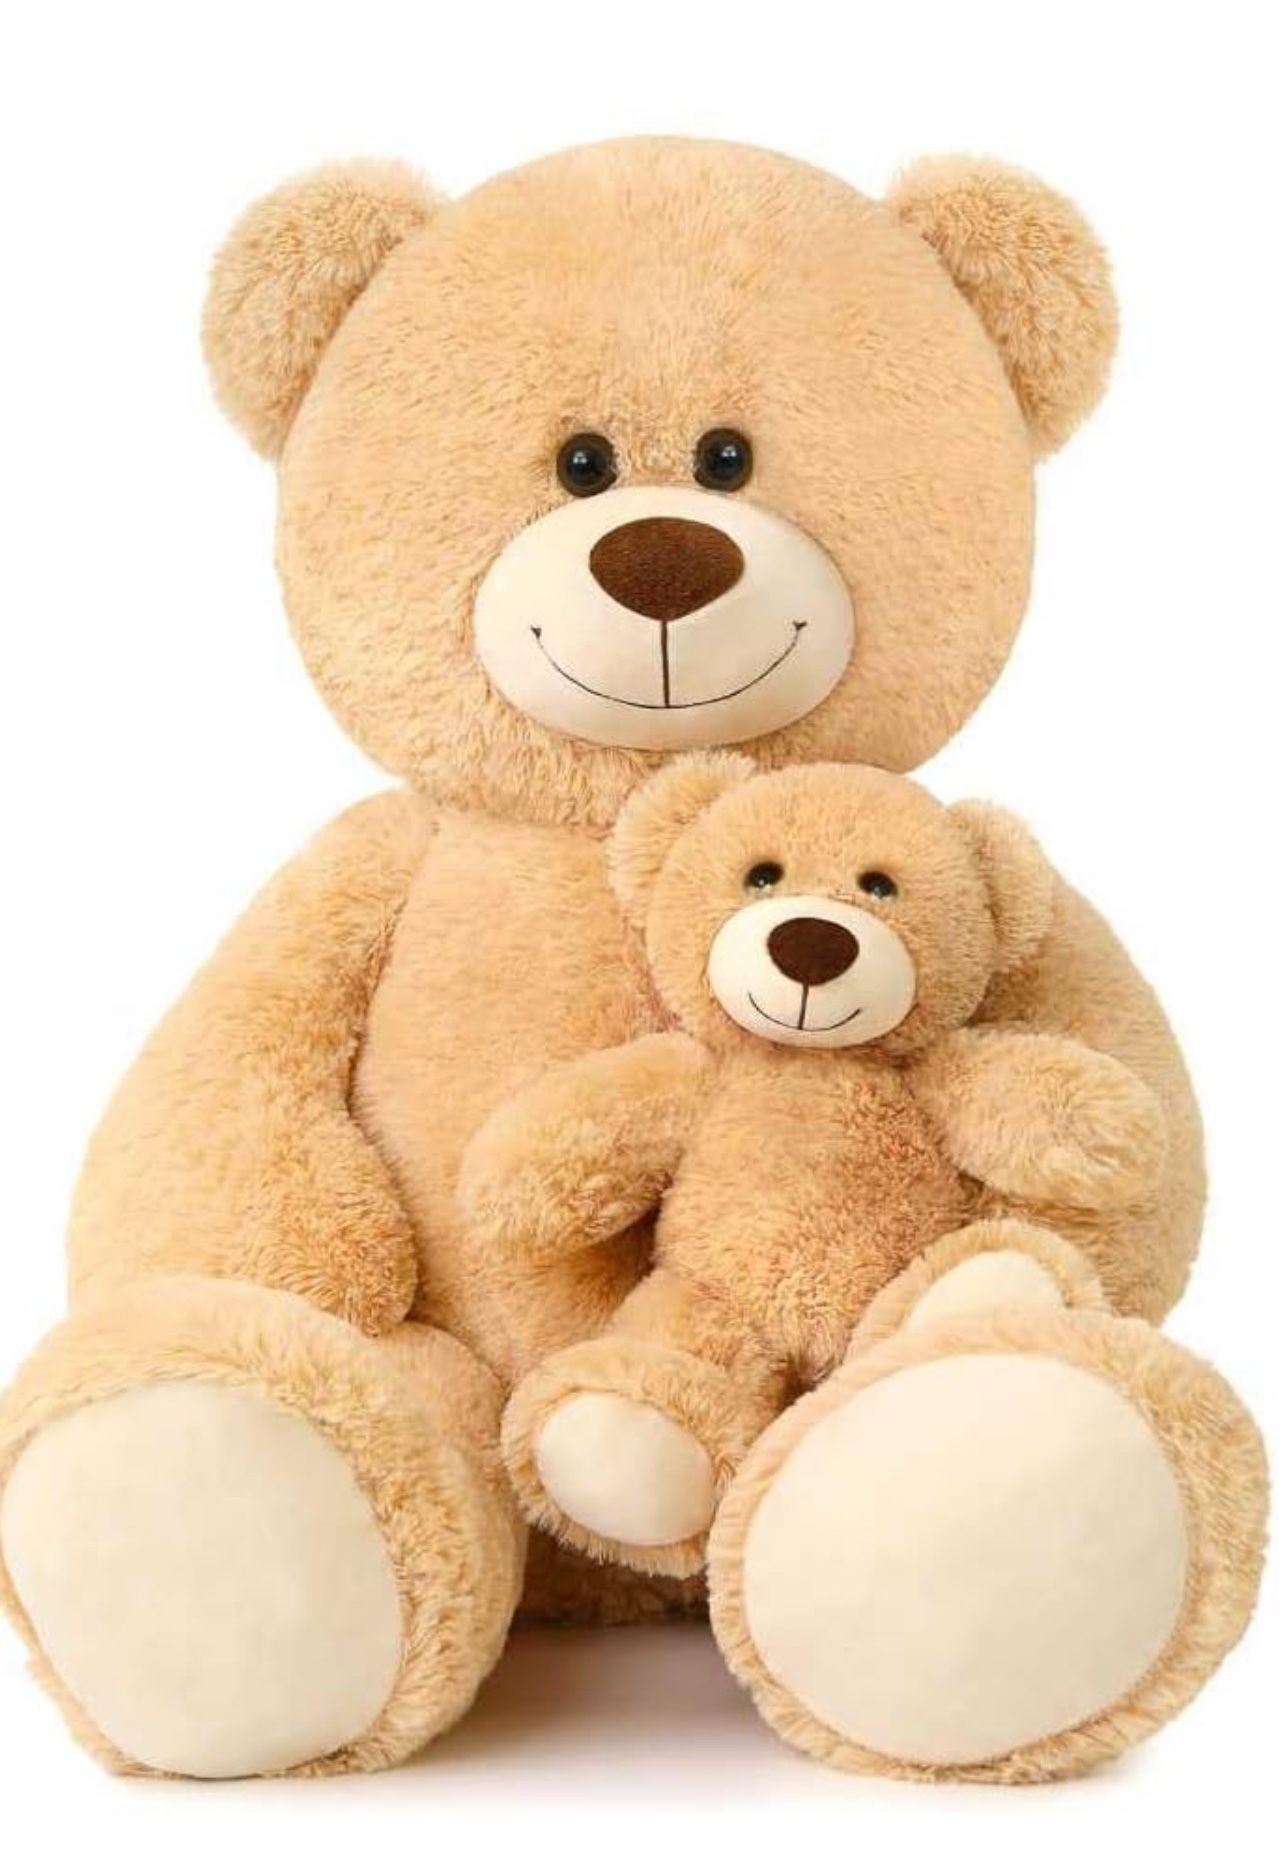 MorisMos Giant Teddy Bear Mommy and Baby Bear Soft Plush Bear Stuffed Animal for Teddy Bear Baby Shower, Tan, 39 Inches *New* Retail Price: $33.99